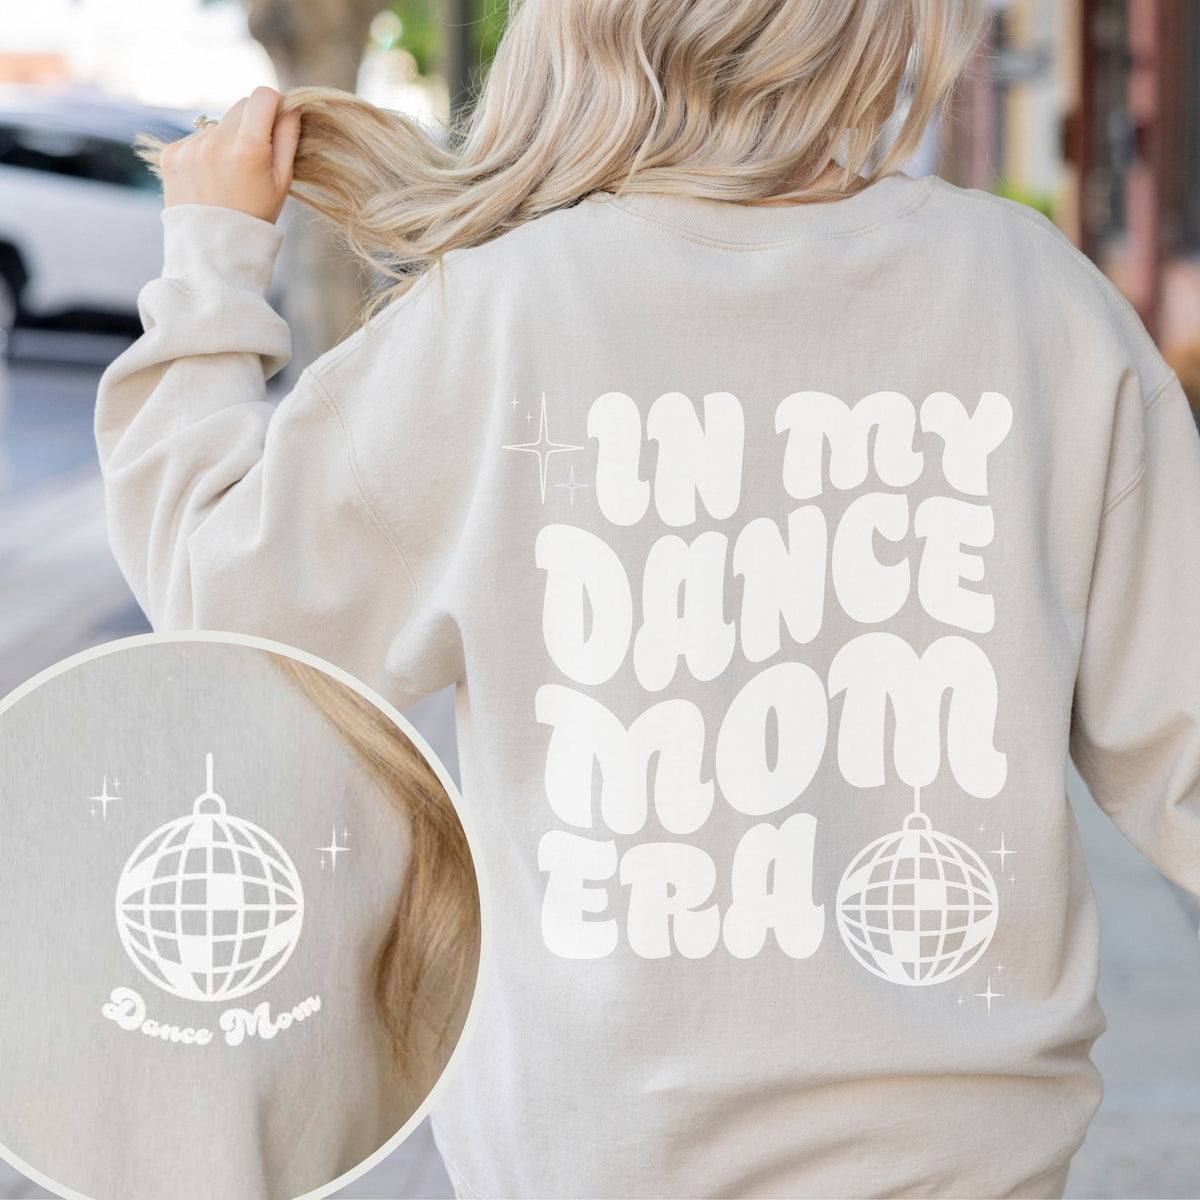 Dance Mom Sweatshirt | In My Dance Mom Era Sweatshirt | Dance Mom Gift Sweatshirt TheFringeCultureCollective